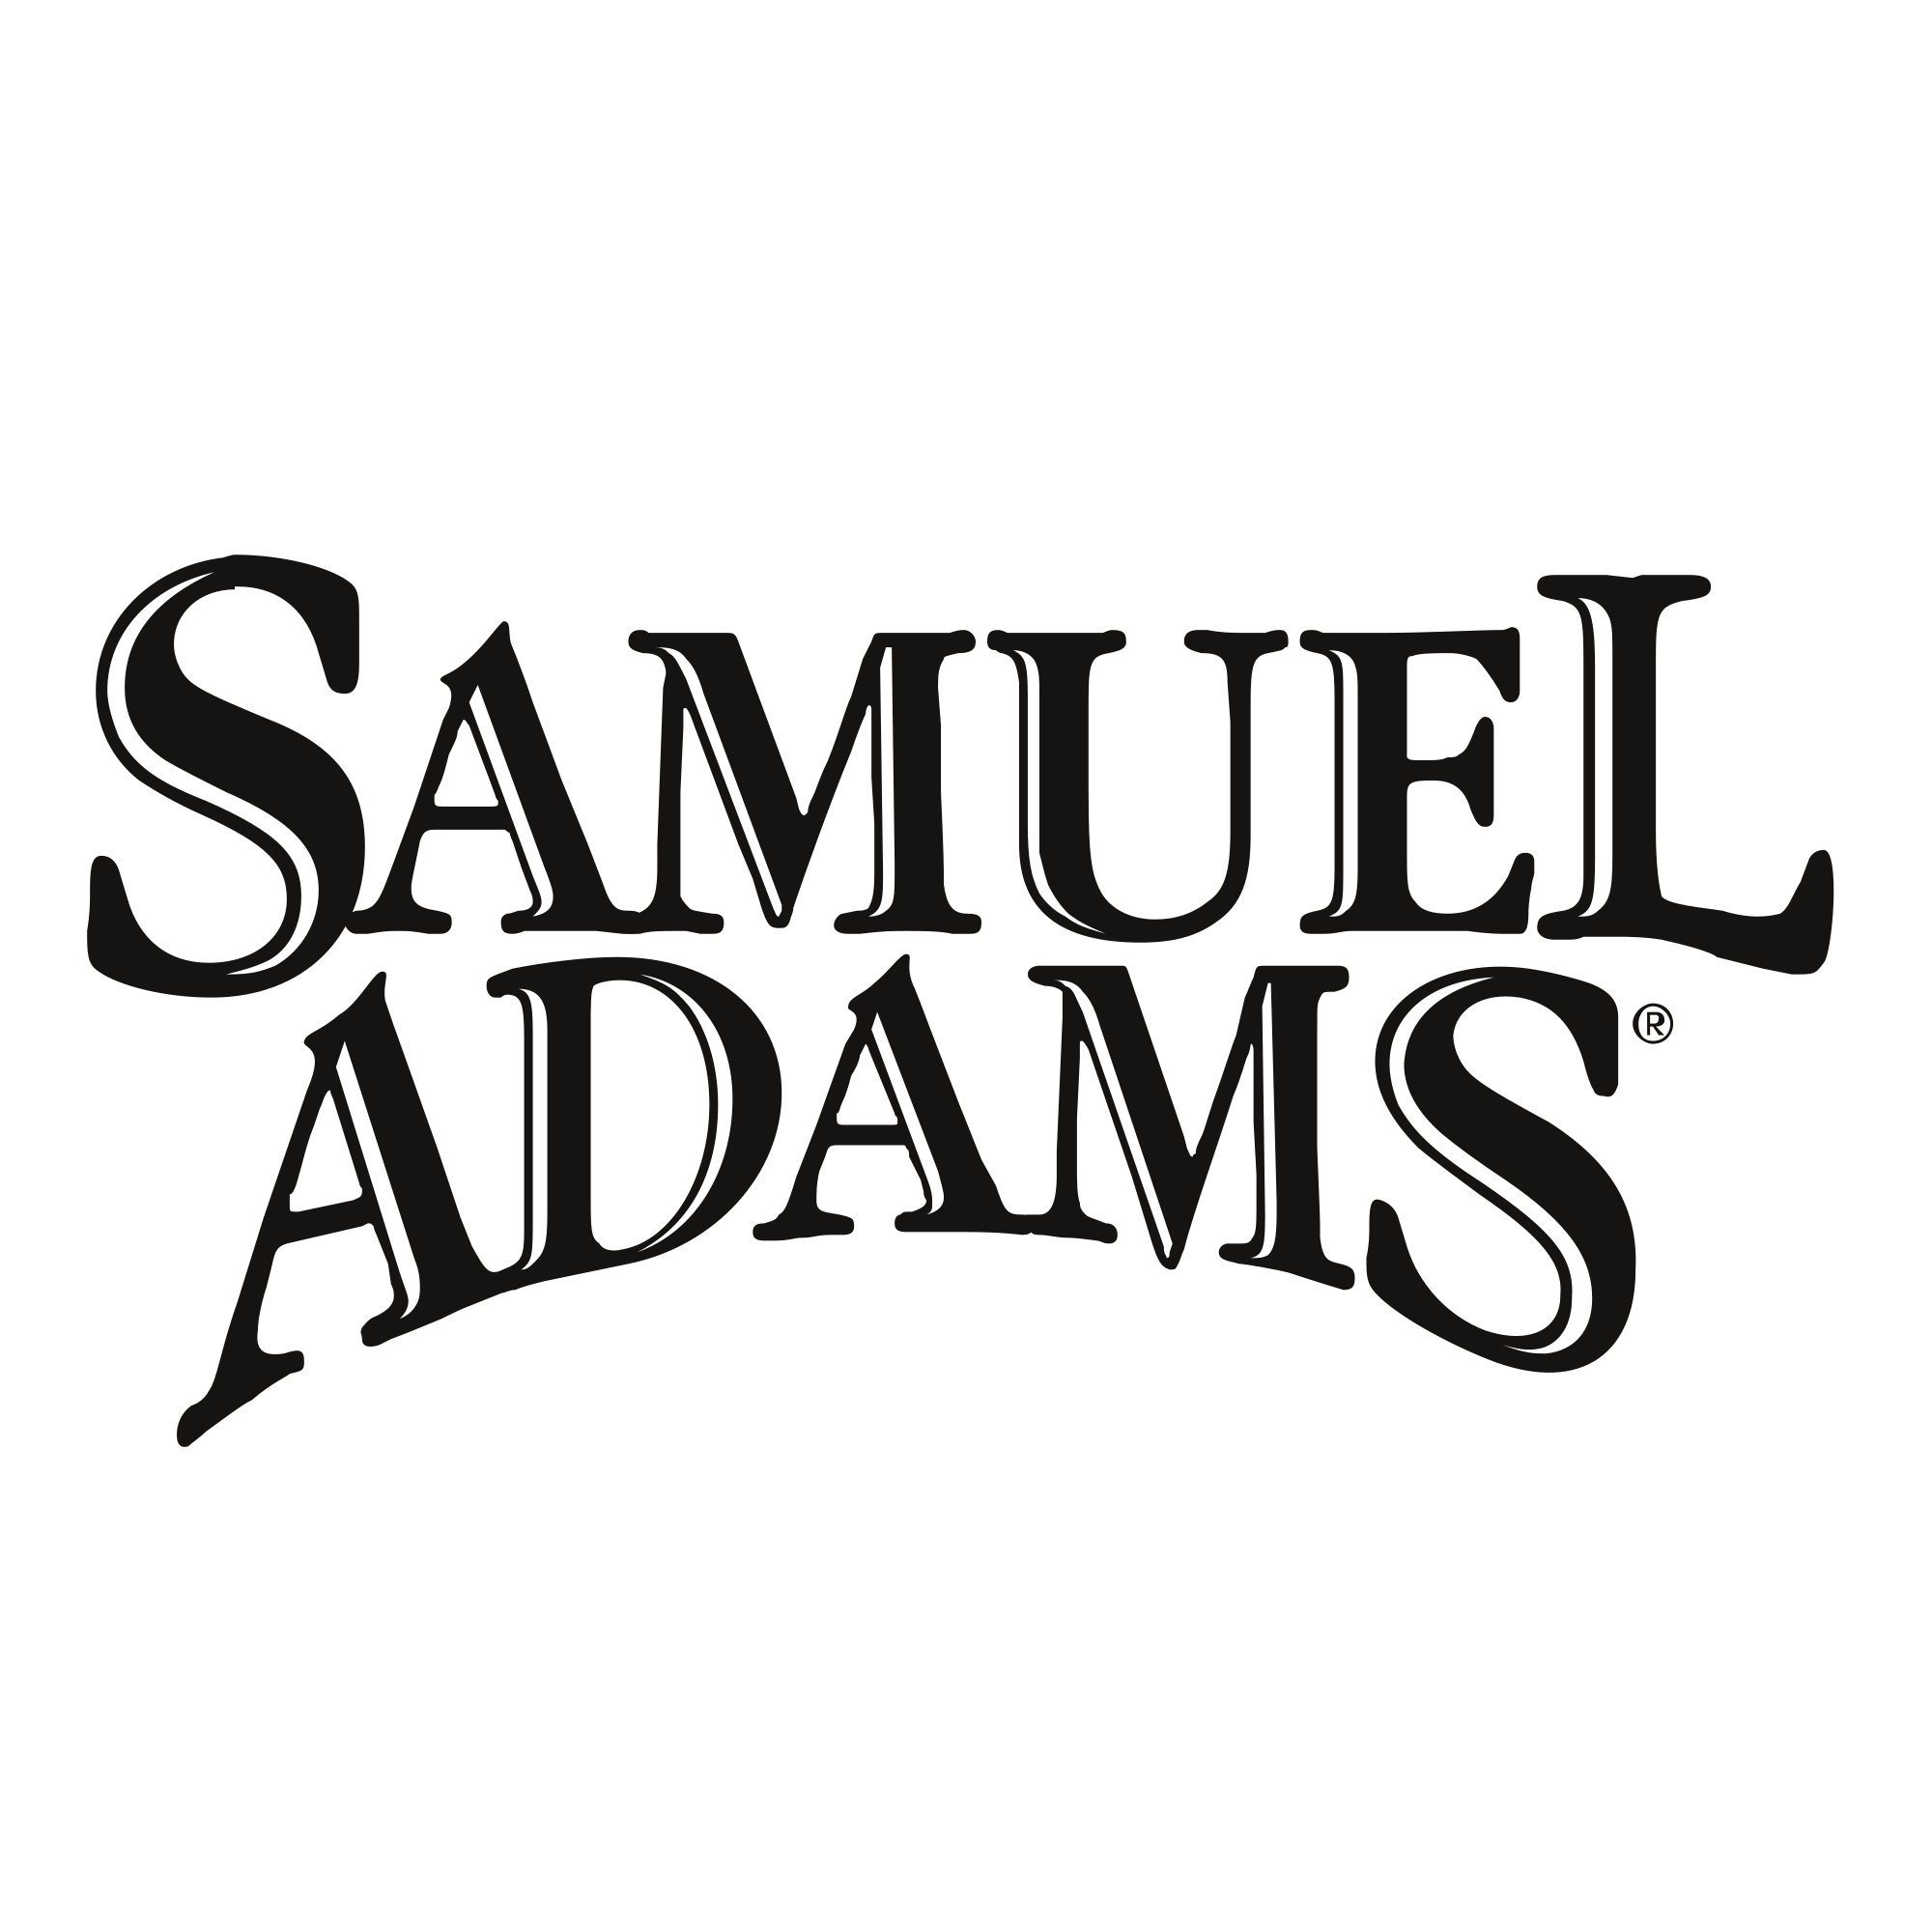 Adams Logo - File:Samuel Adams logo.svg - Wikimedia Commons